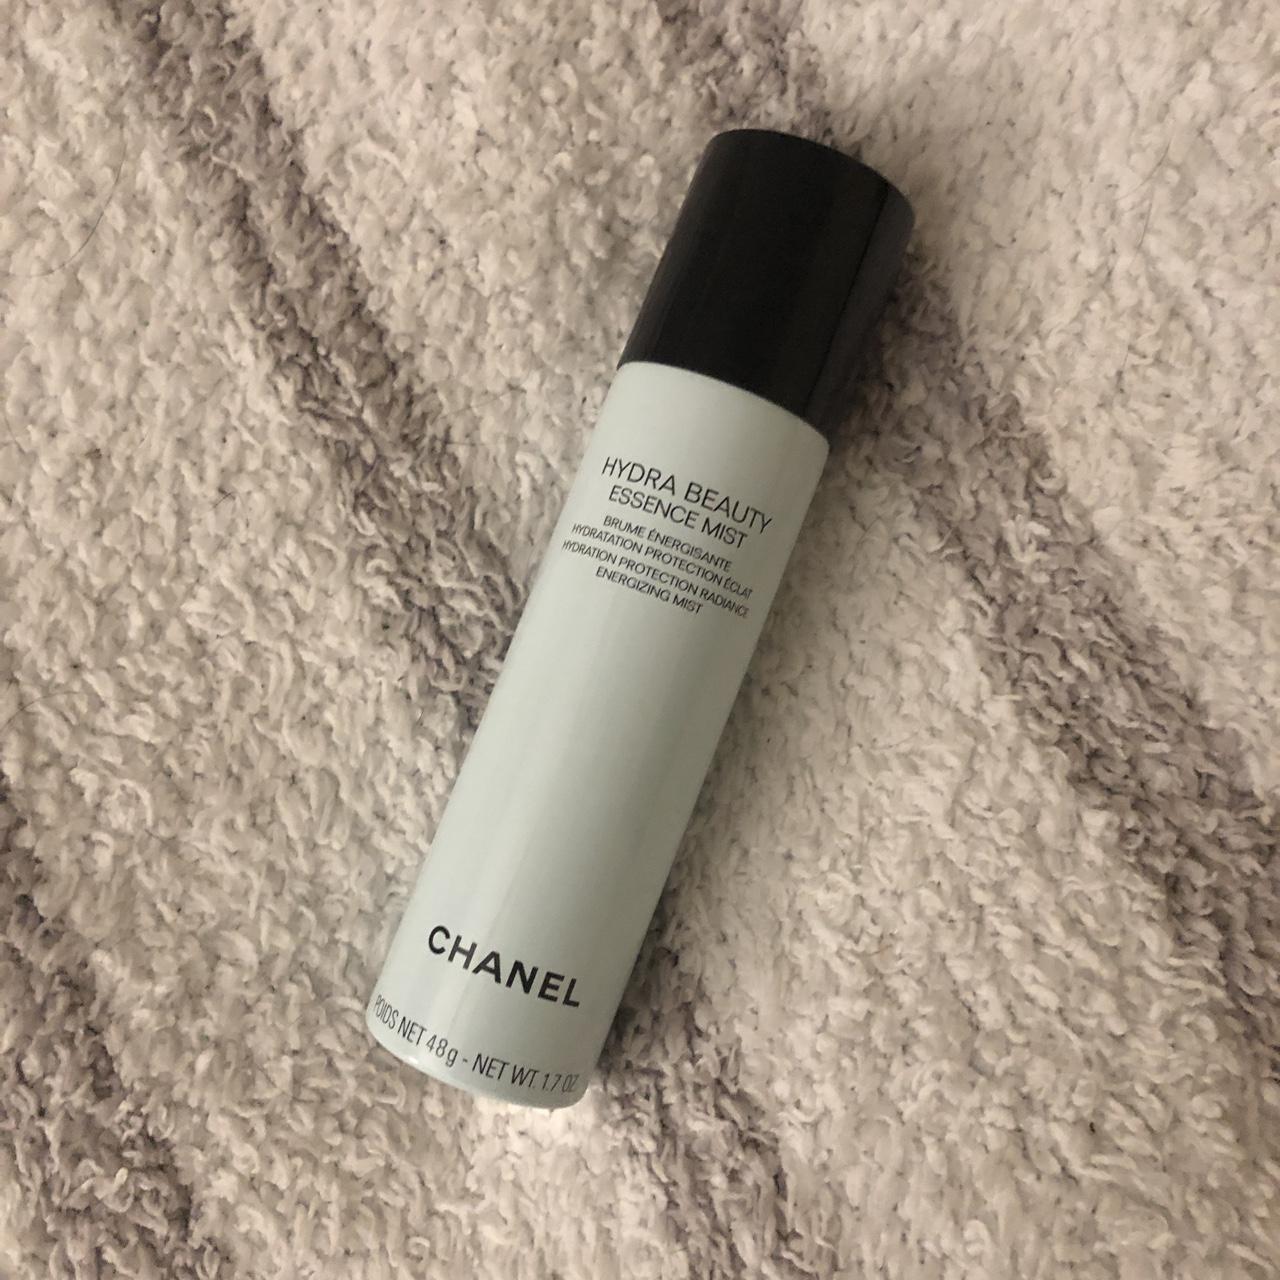 Chanel hydra beauty essence mist! Never used - Depop